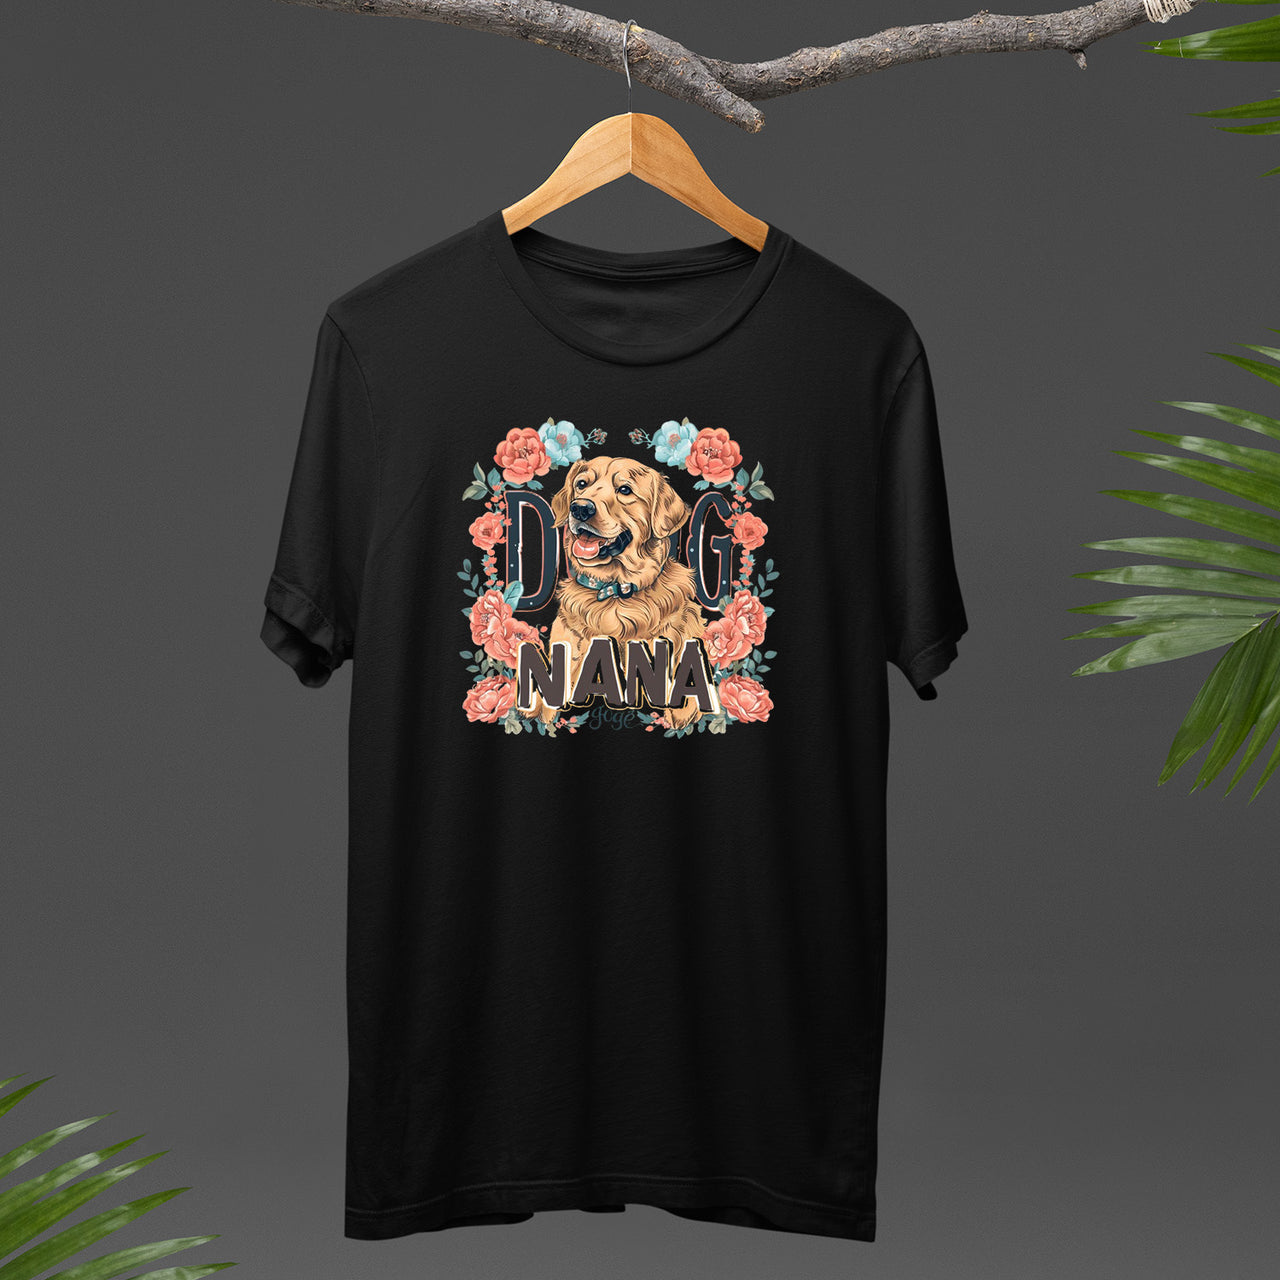 Golden Retriever Dog T-shirt, Pet Lover Shirt, Dog Lover Shirt, Dog Nana T-Shirt, Dog Owner Shirt, Gift For Dog Grandma, Funny Dog Shirts, Women Dog T-Shirt, Mother's Day Gift, Dog Lover Wife Gifts, Dog Shirt